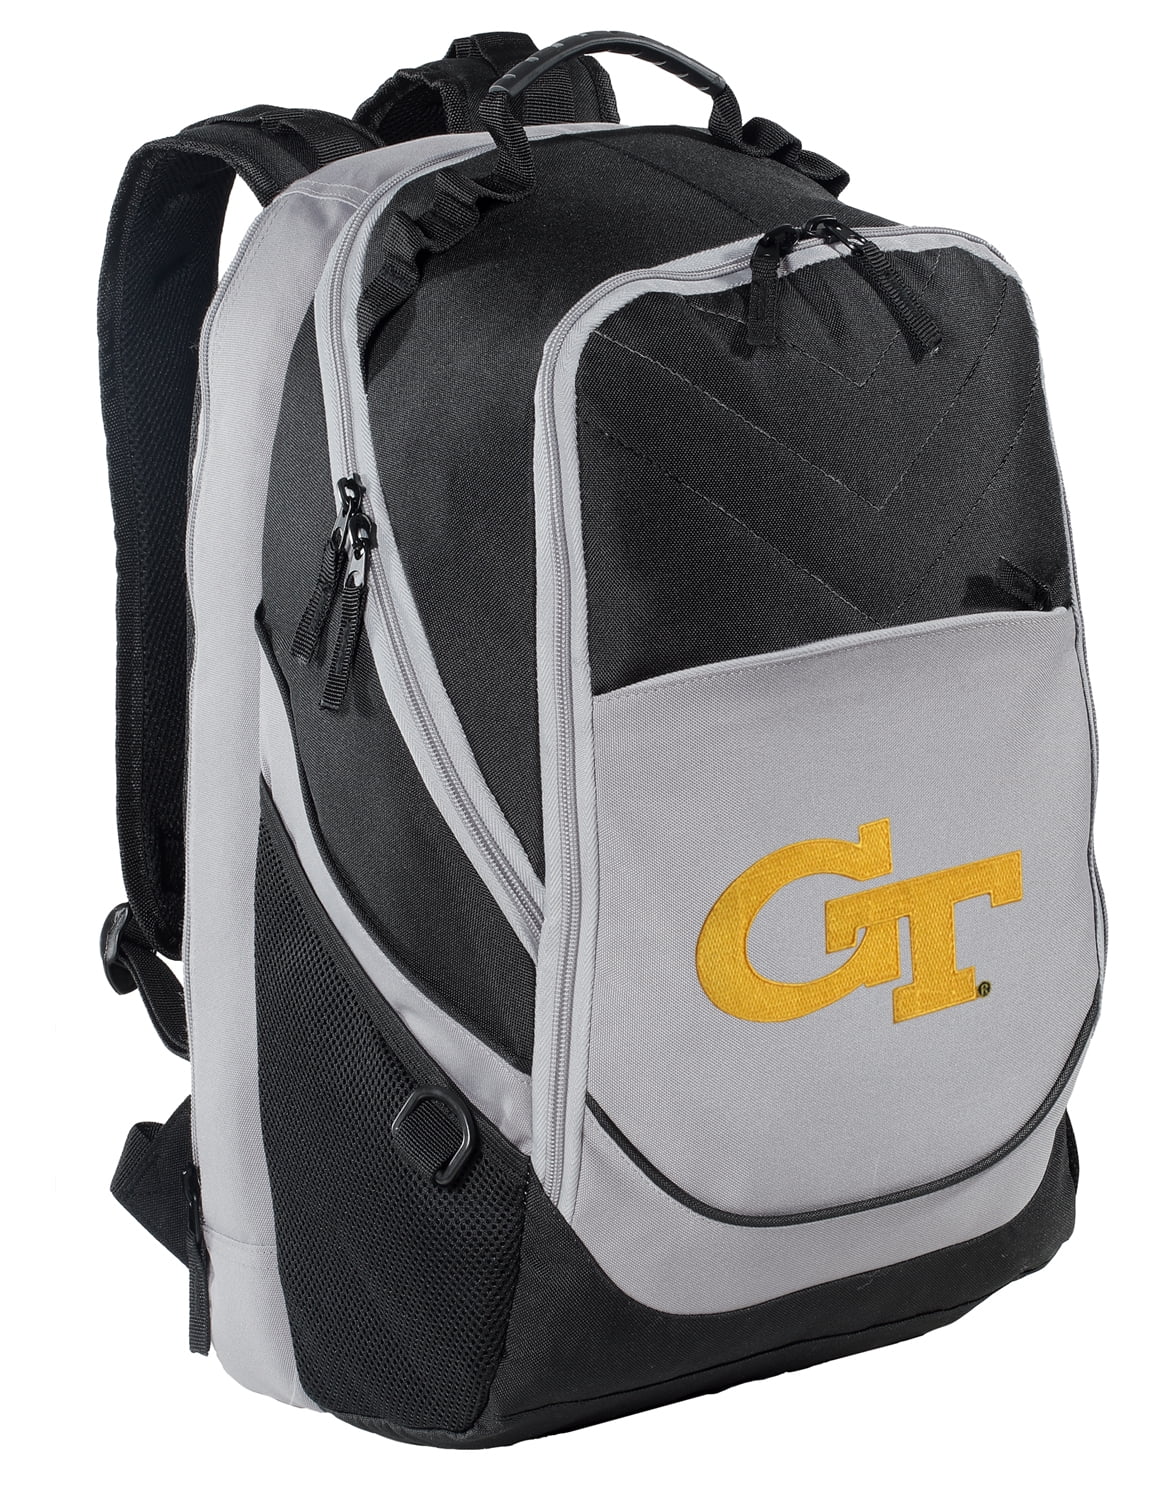 best tech backpack